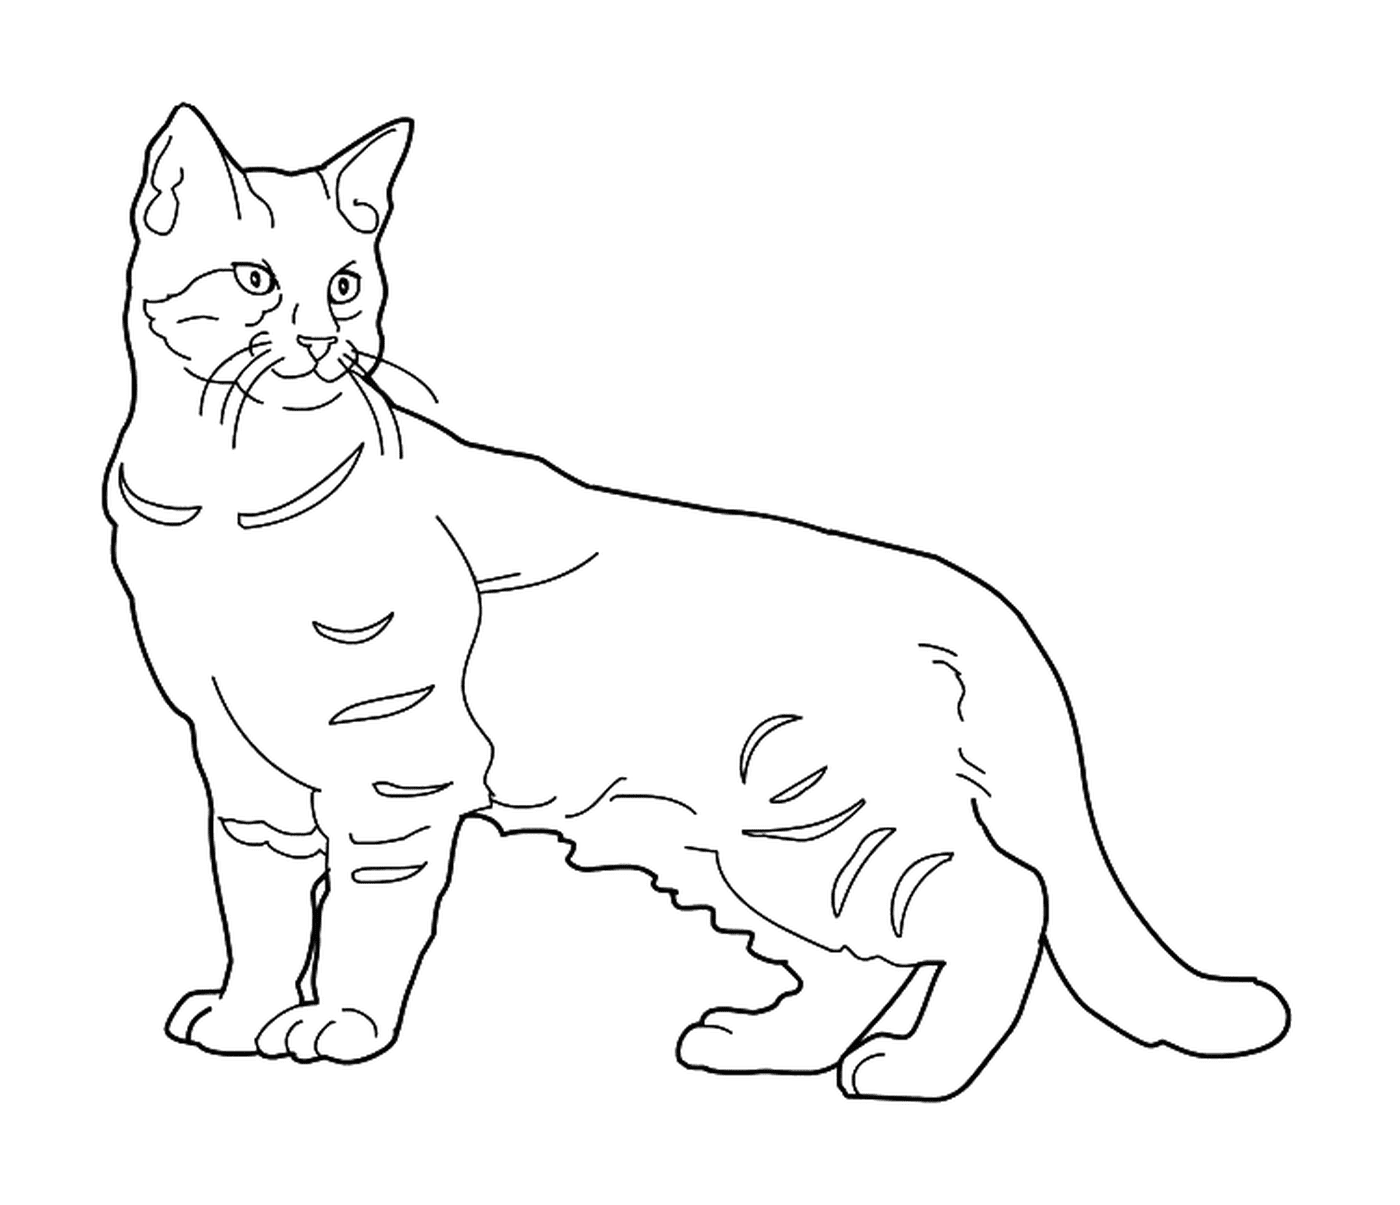  Пикси Боб, кошка с коротким хвостом 